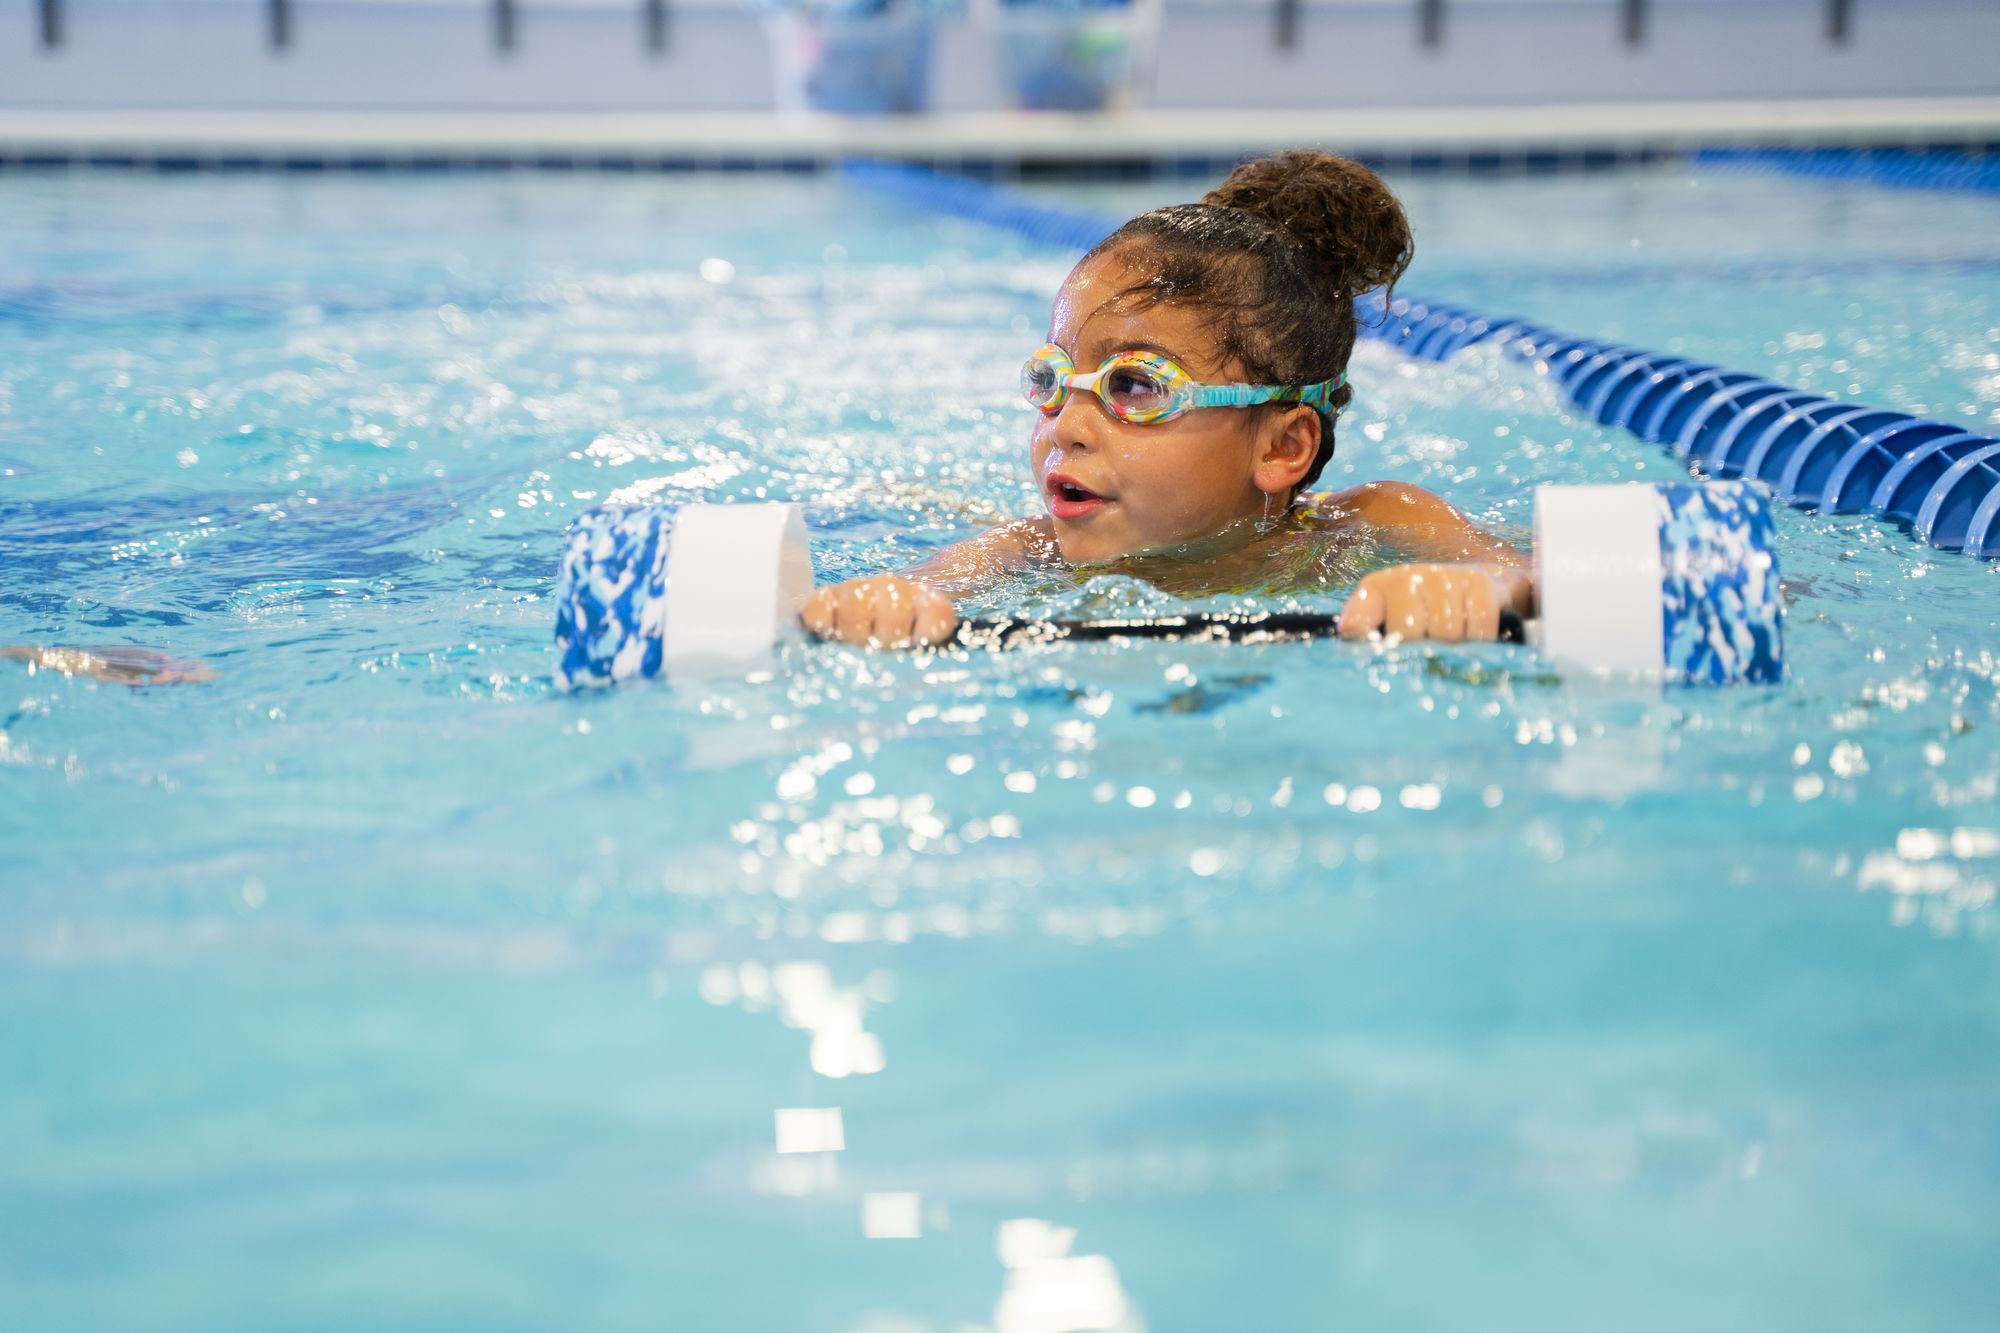 Girl using rhythmic breathing while swimming